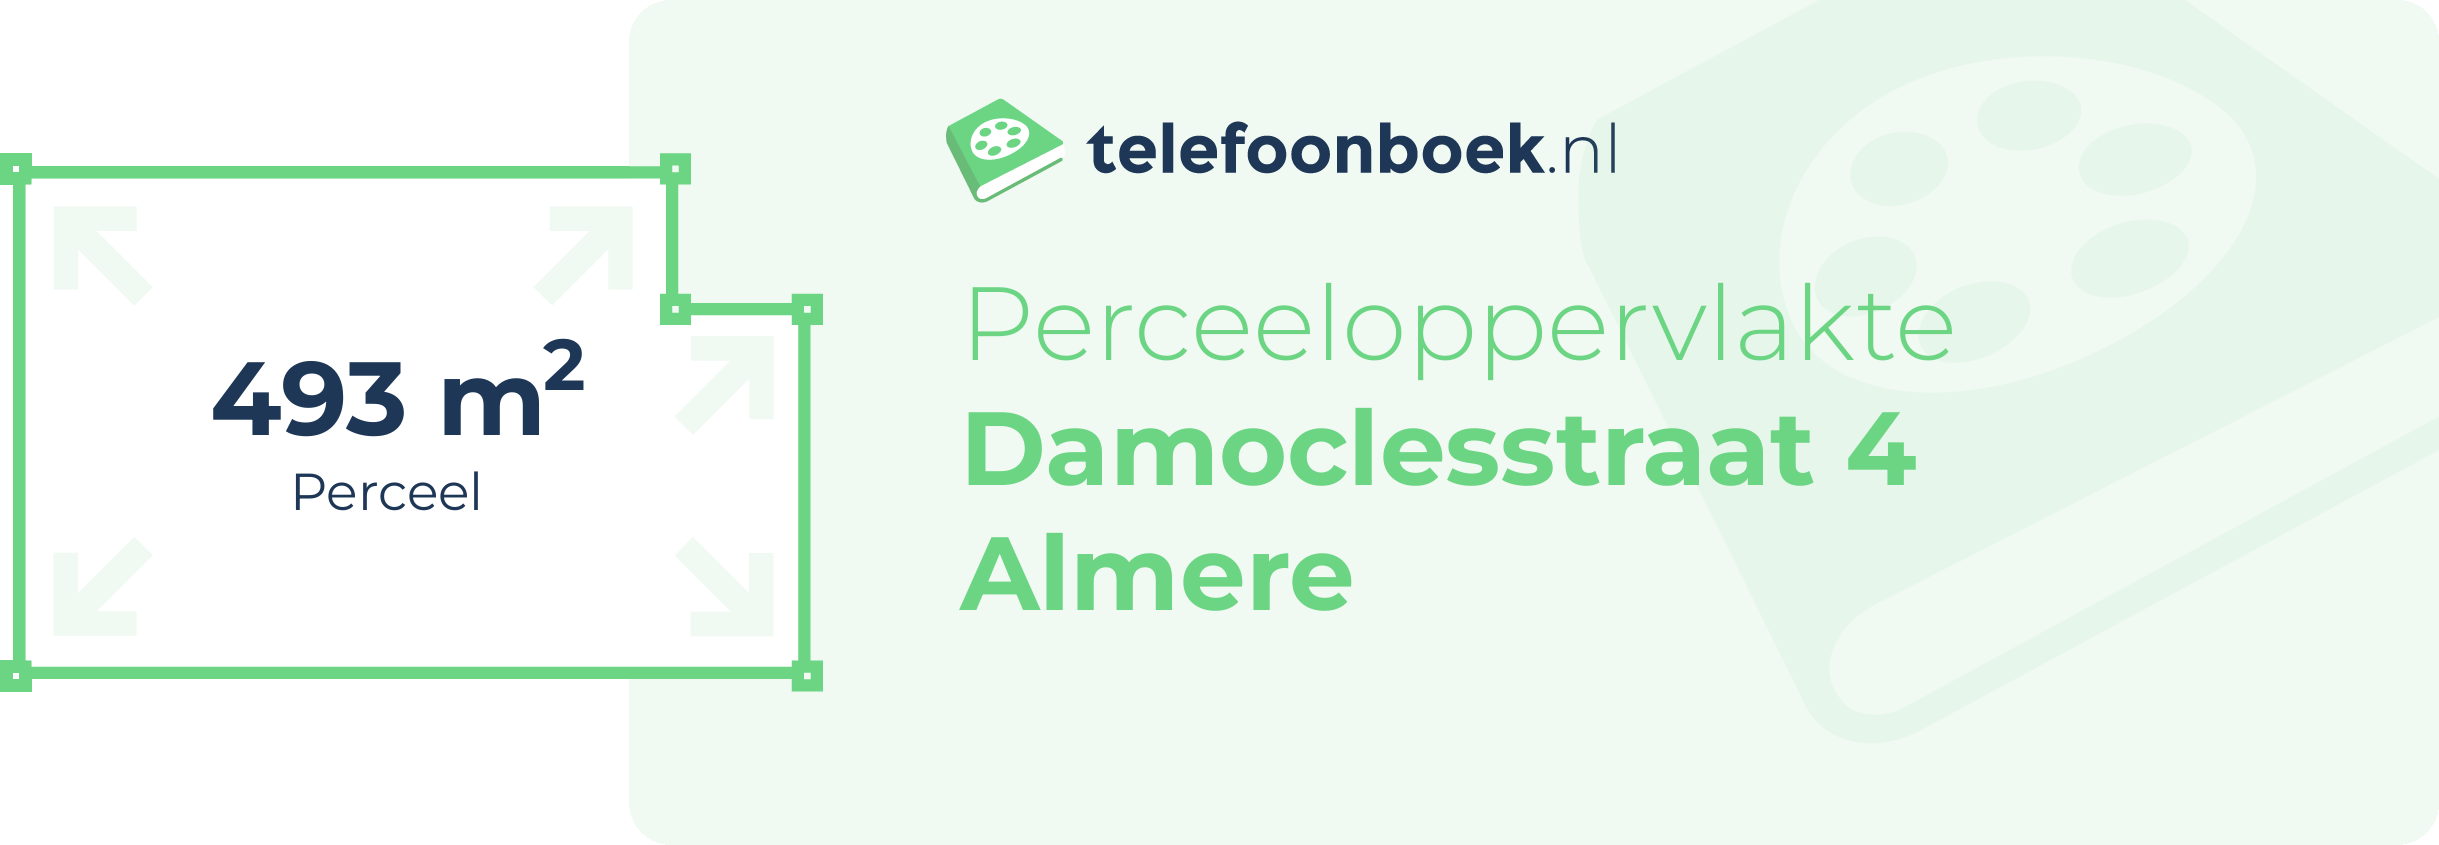 Perceeloppervlakte Damoclesstraat 4 Almere